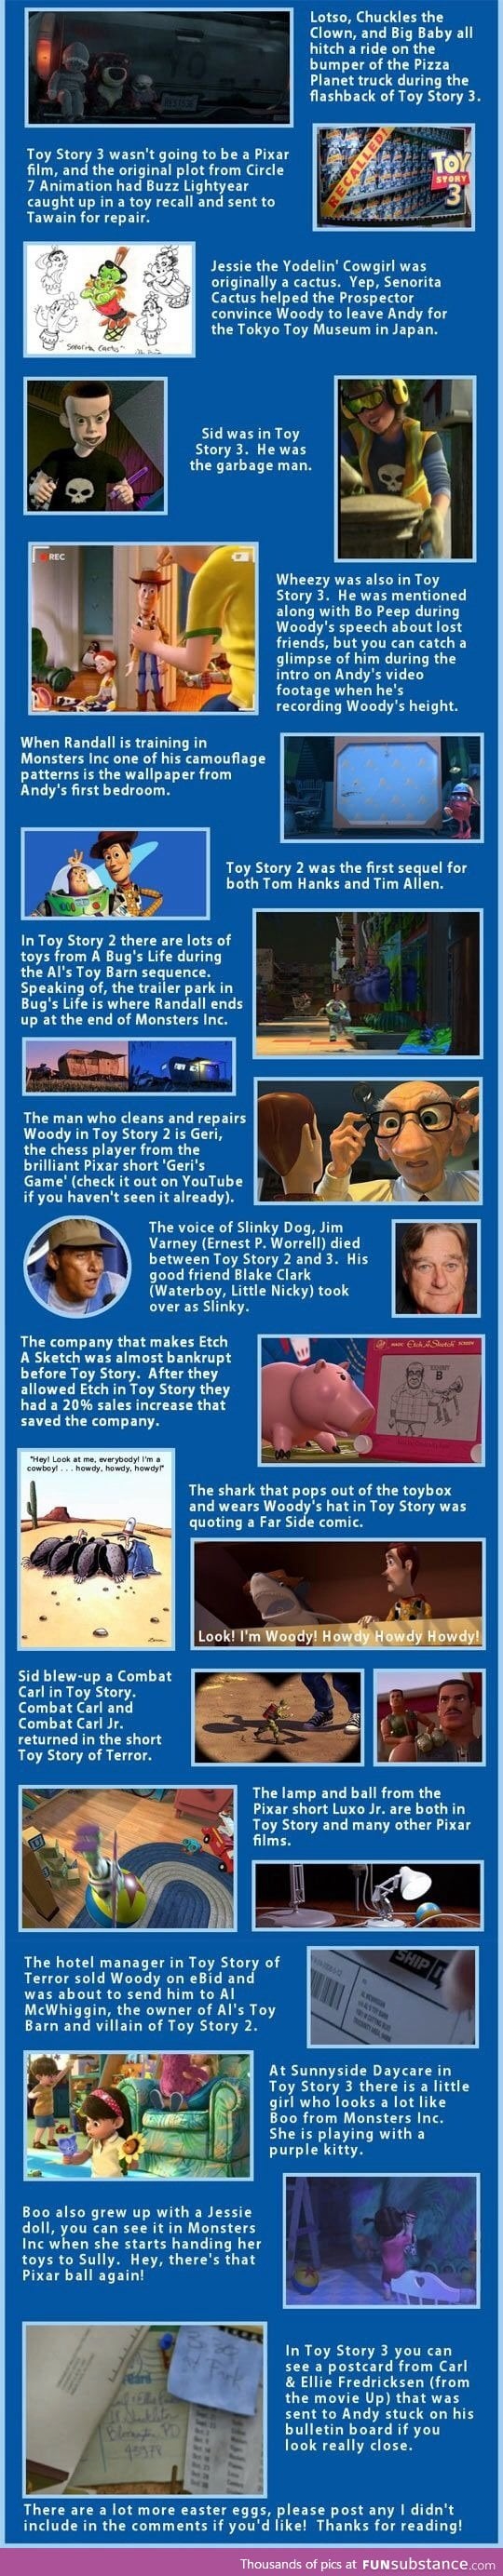 More pixar facts!